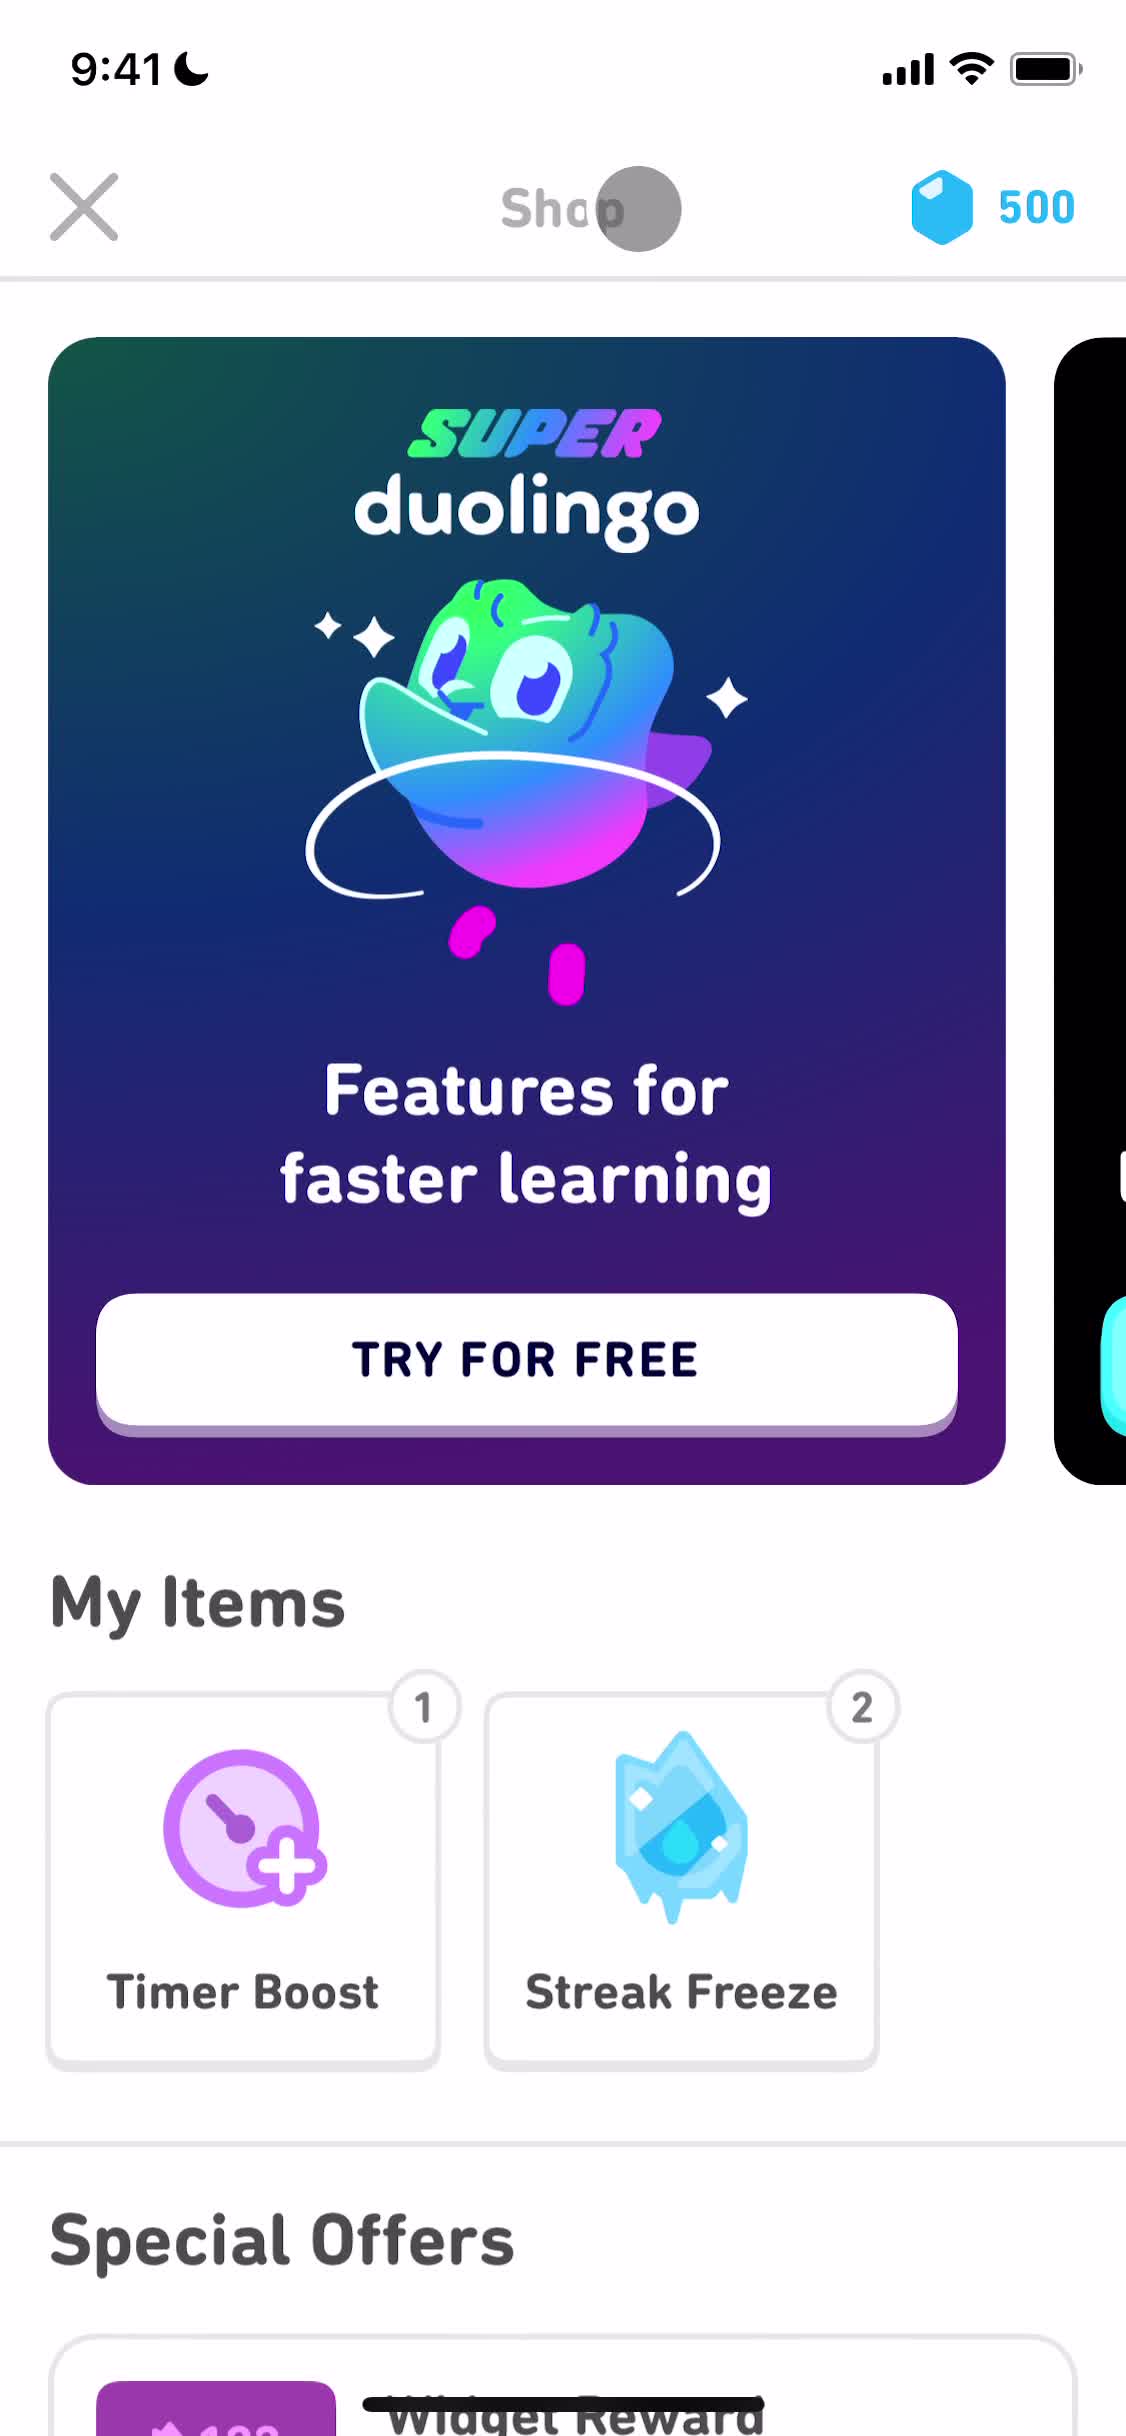 Screenshot of Upgrade on Upgrading your account on Duolingo user flow